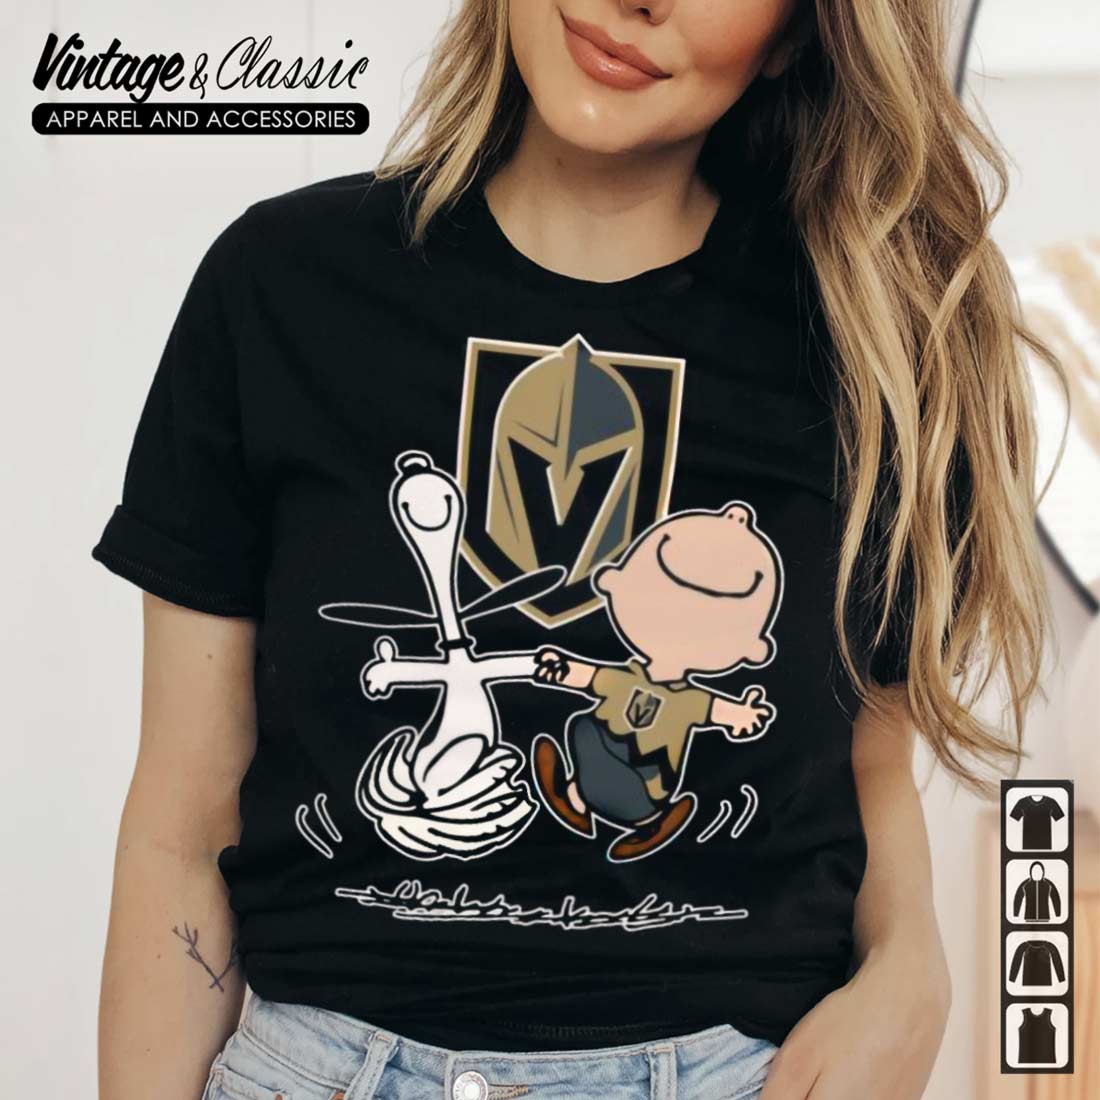 https://vintagenclassic.com/wp-content/uploads/2022/11/Charlie-Brown-Snoopy-Vegas-Golden-Knights-T-shirt.jpg